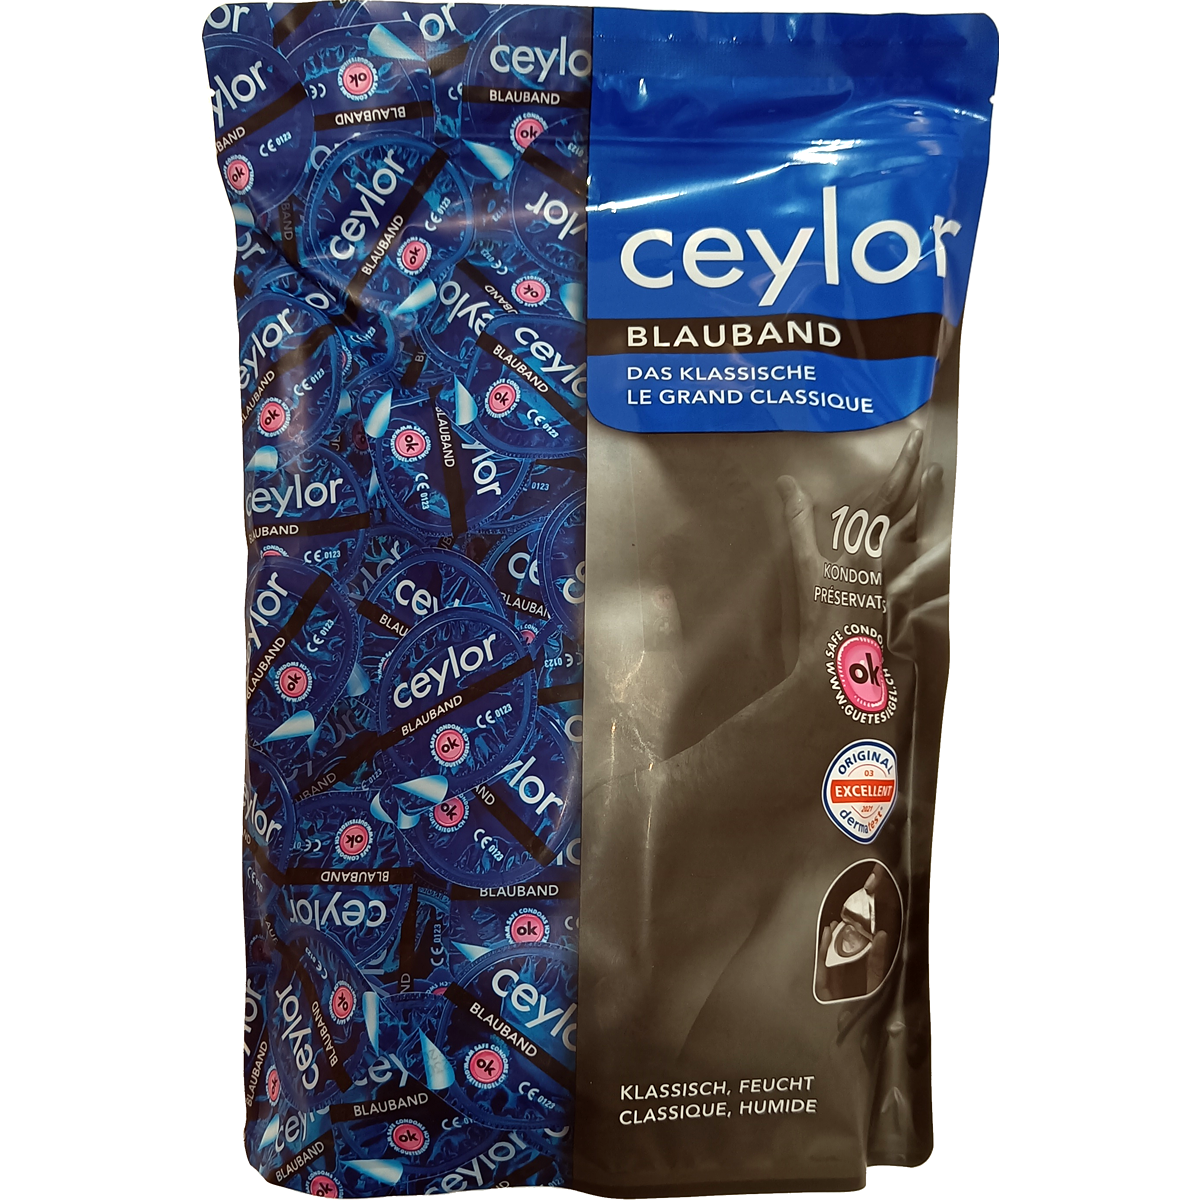 Ceylor «Blauband» 100 skin friendly condoms with cream lubricant, hygienically sealed in condom pods